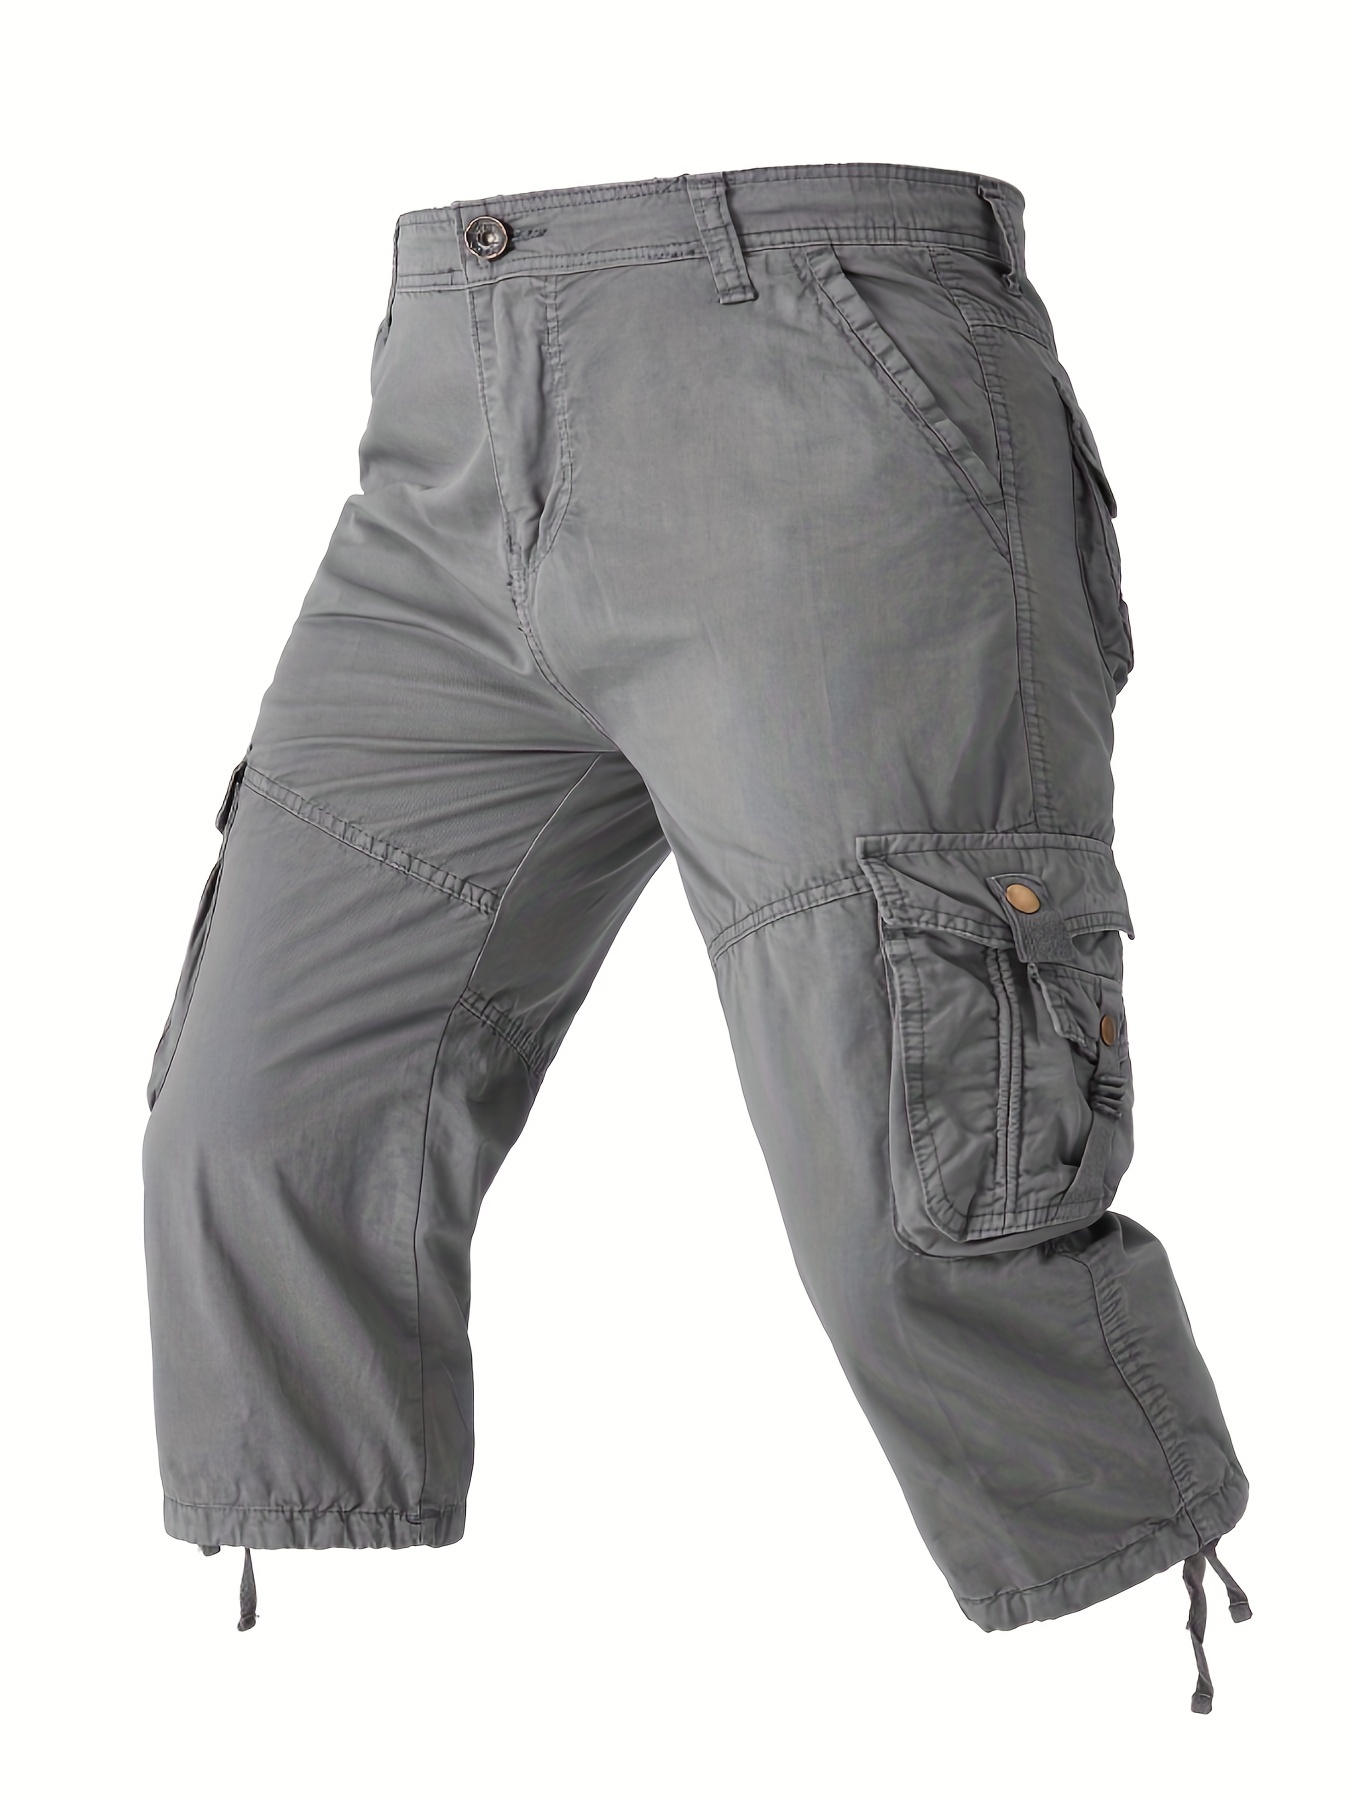 Capri Pants for Women Cotton Linen Plus Size Cargo Pants Capris Elastic  High Waisted 3/4 Slacks with Multi Pockets (Large, GrayB) 